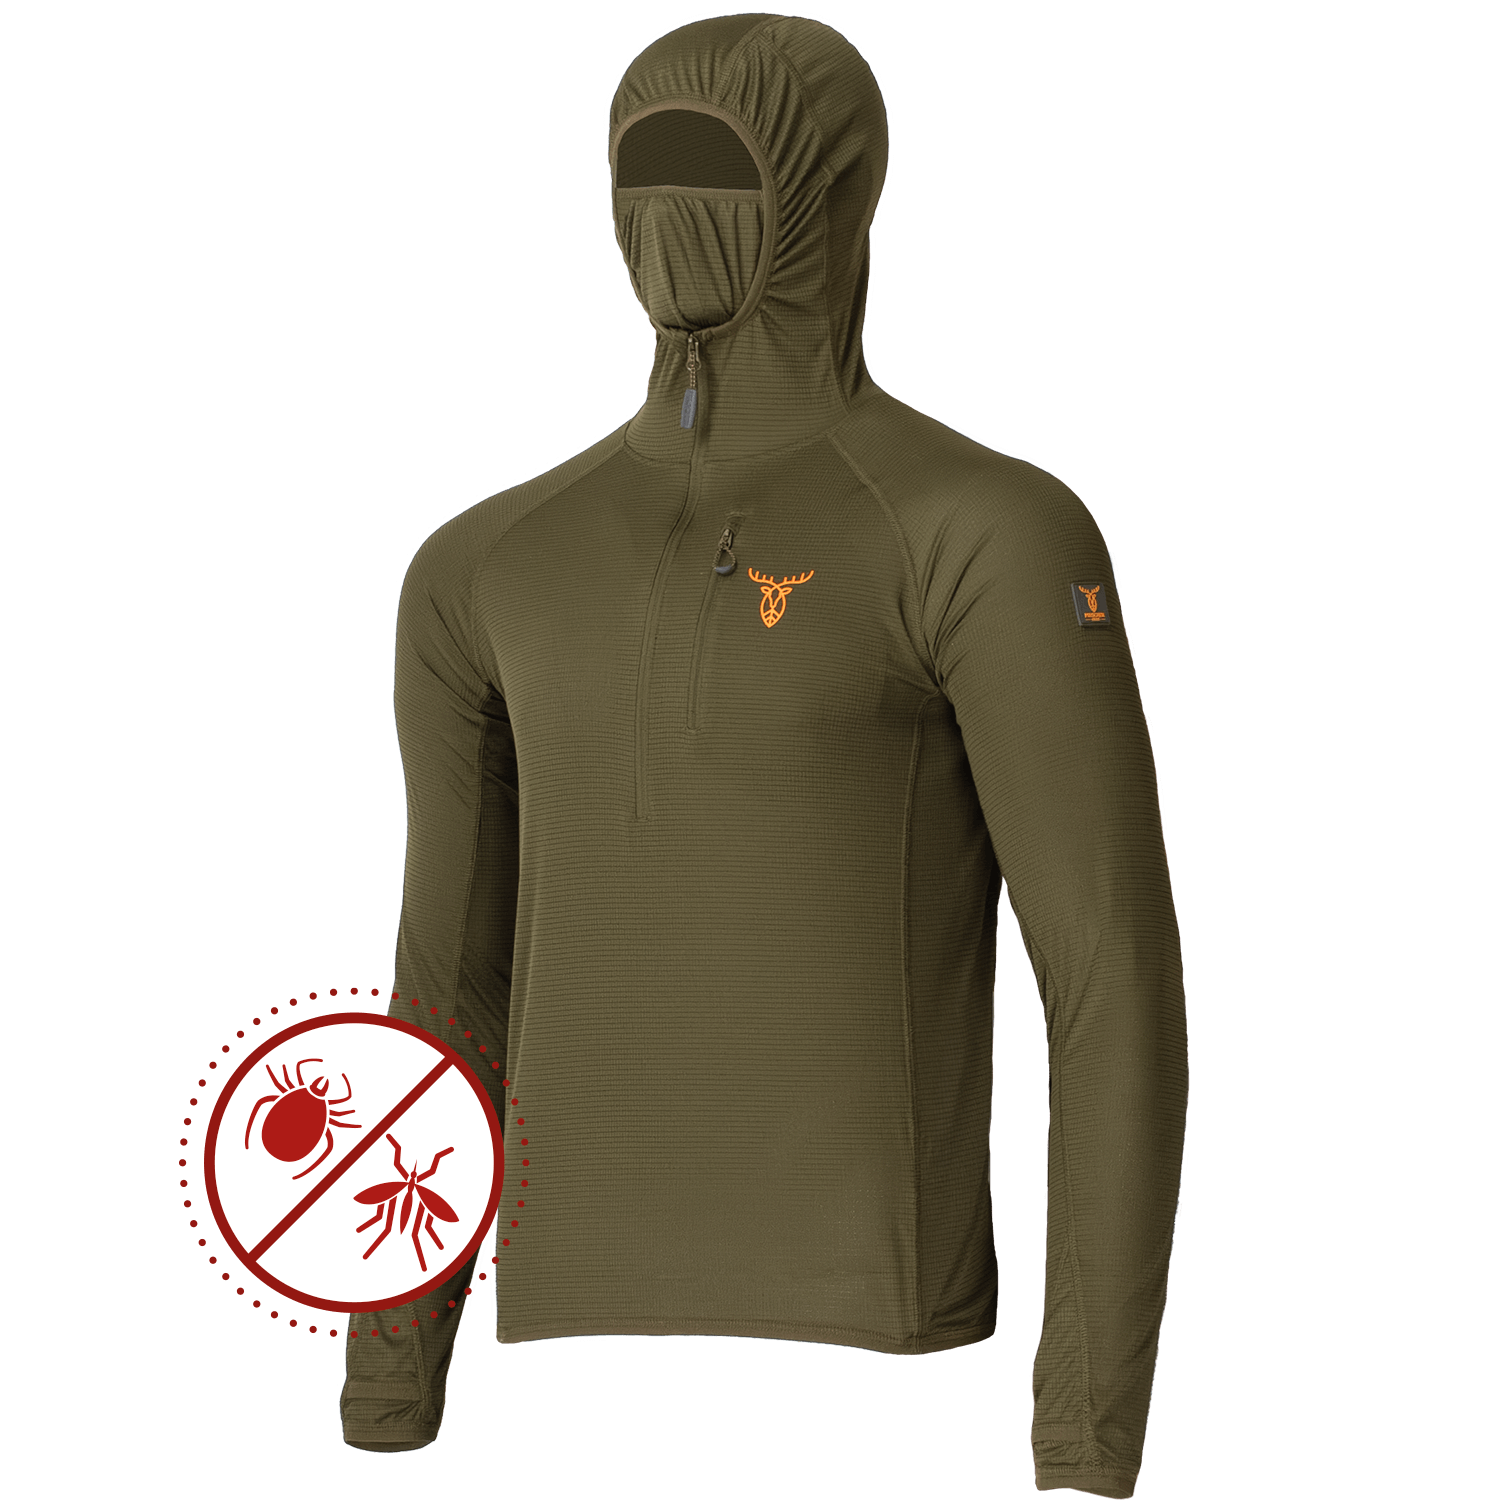 Pirscher Gear Ultralight Tanatex Hoodie Shirt - Insect Protection